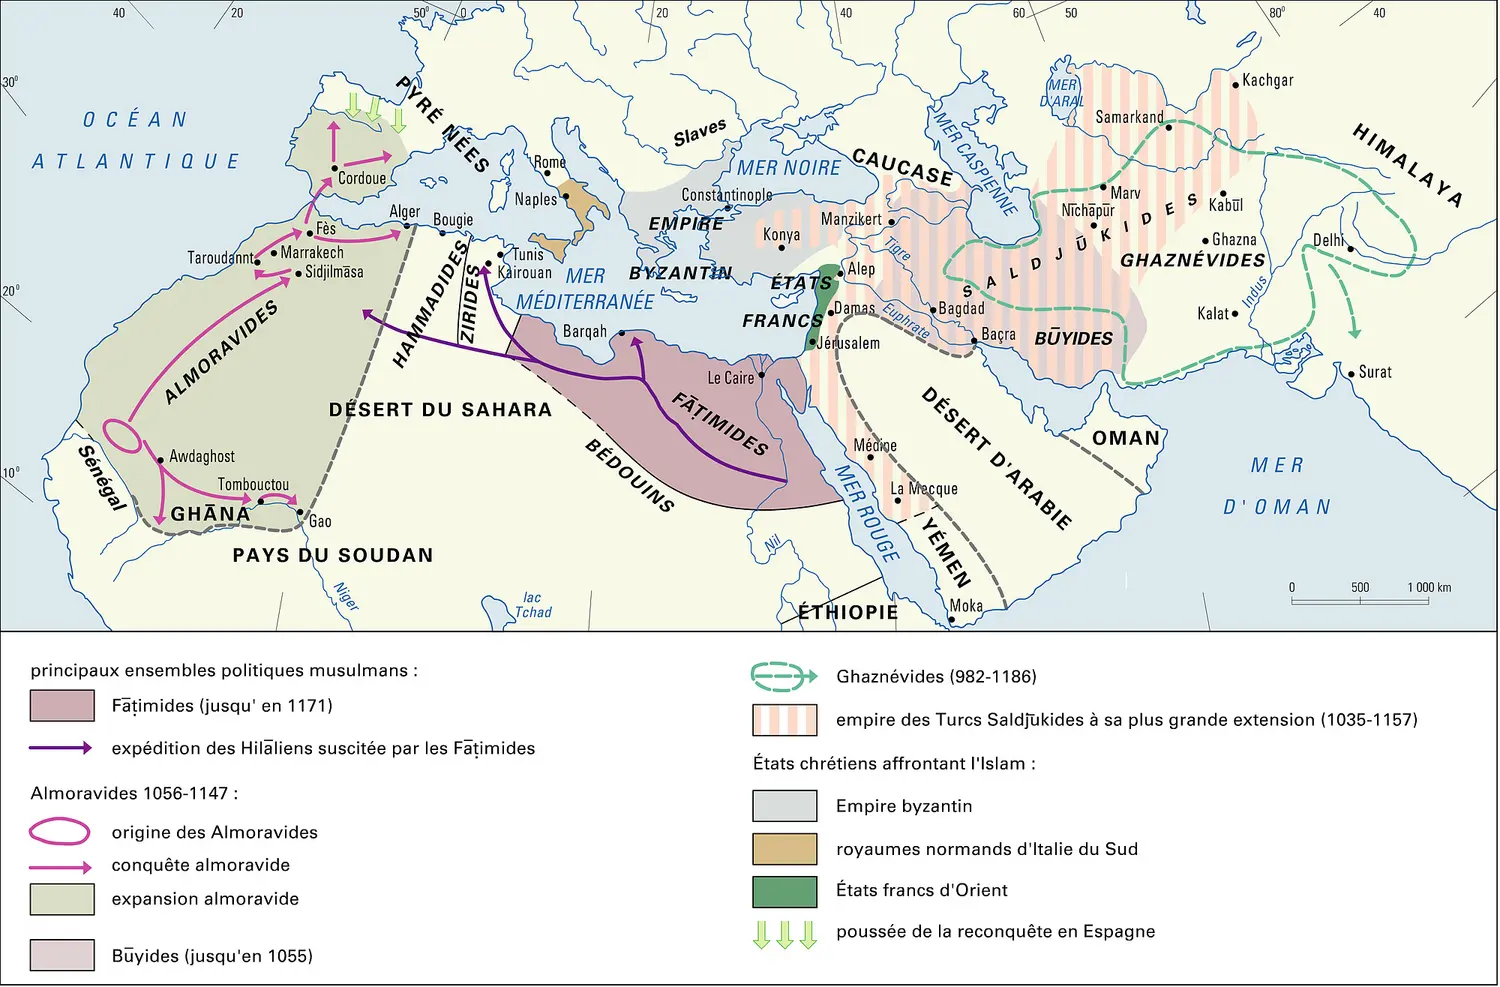 Islam, le monde musulman aux XI<sup>e</sup> et XII<sup>e</sup> siècles